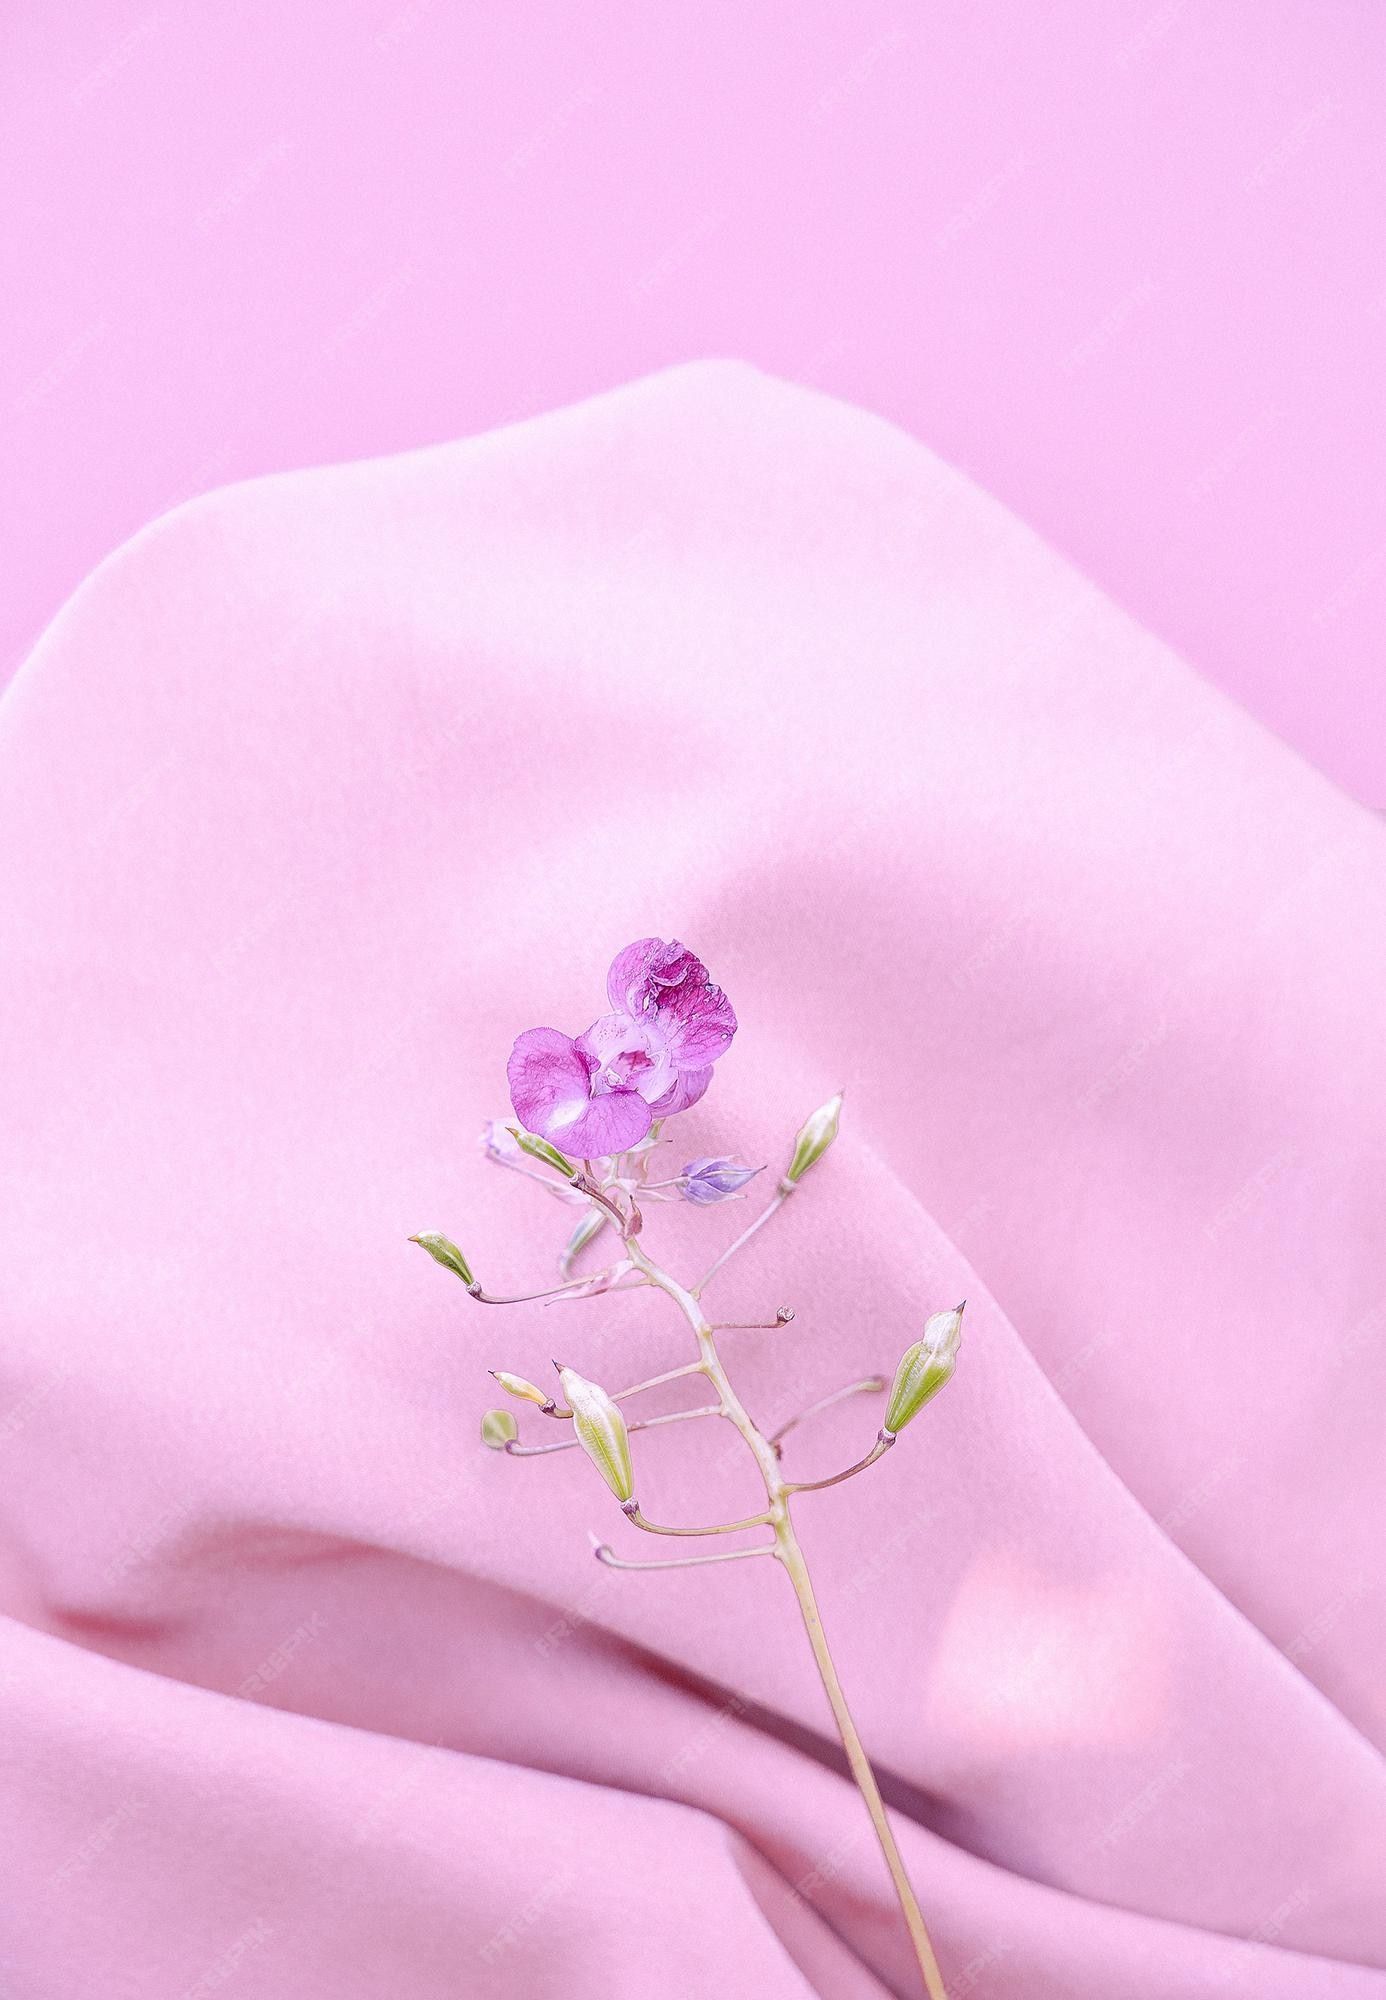 A purple flower sitting on top of a pink cloth - Silk, light purple